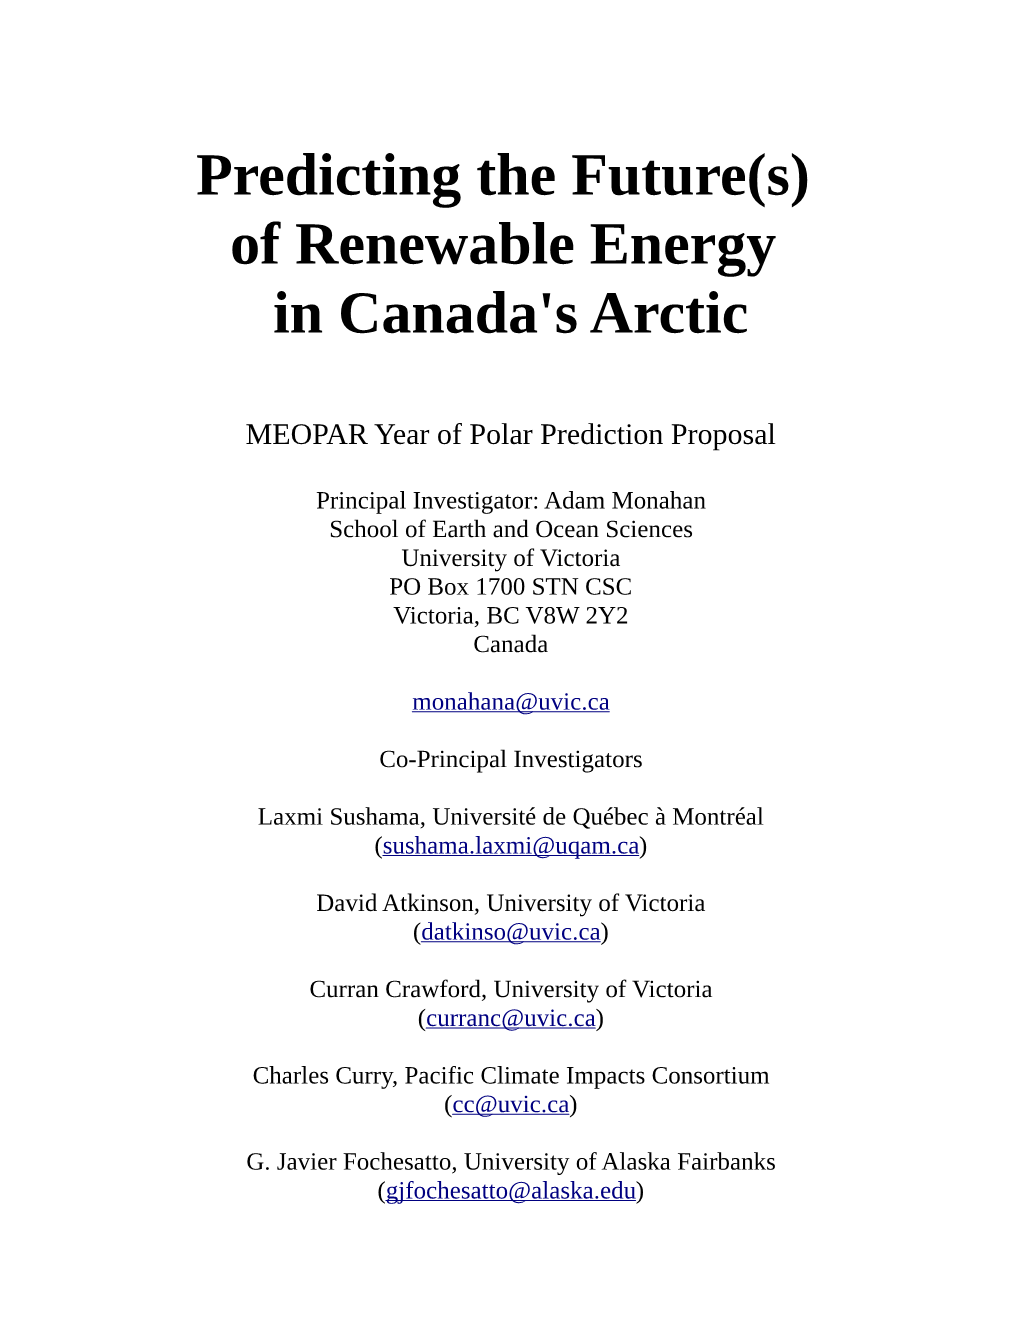 Predicting the Future(S) of Renewable Energy in Canada's Arctic